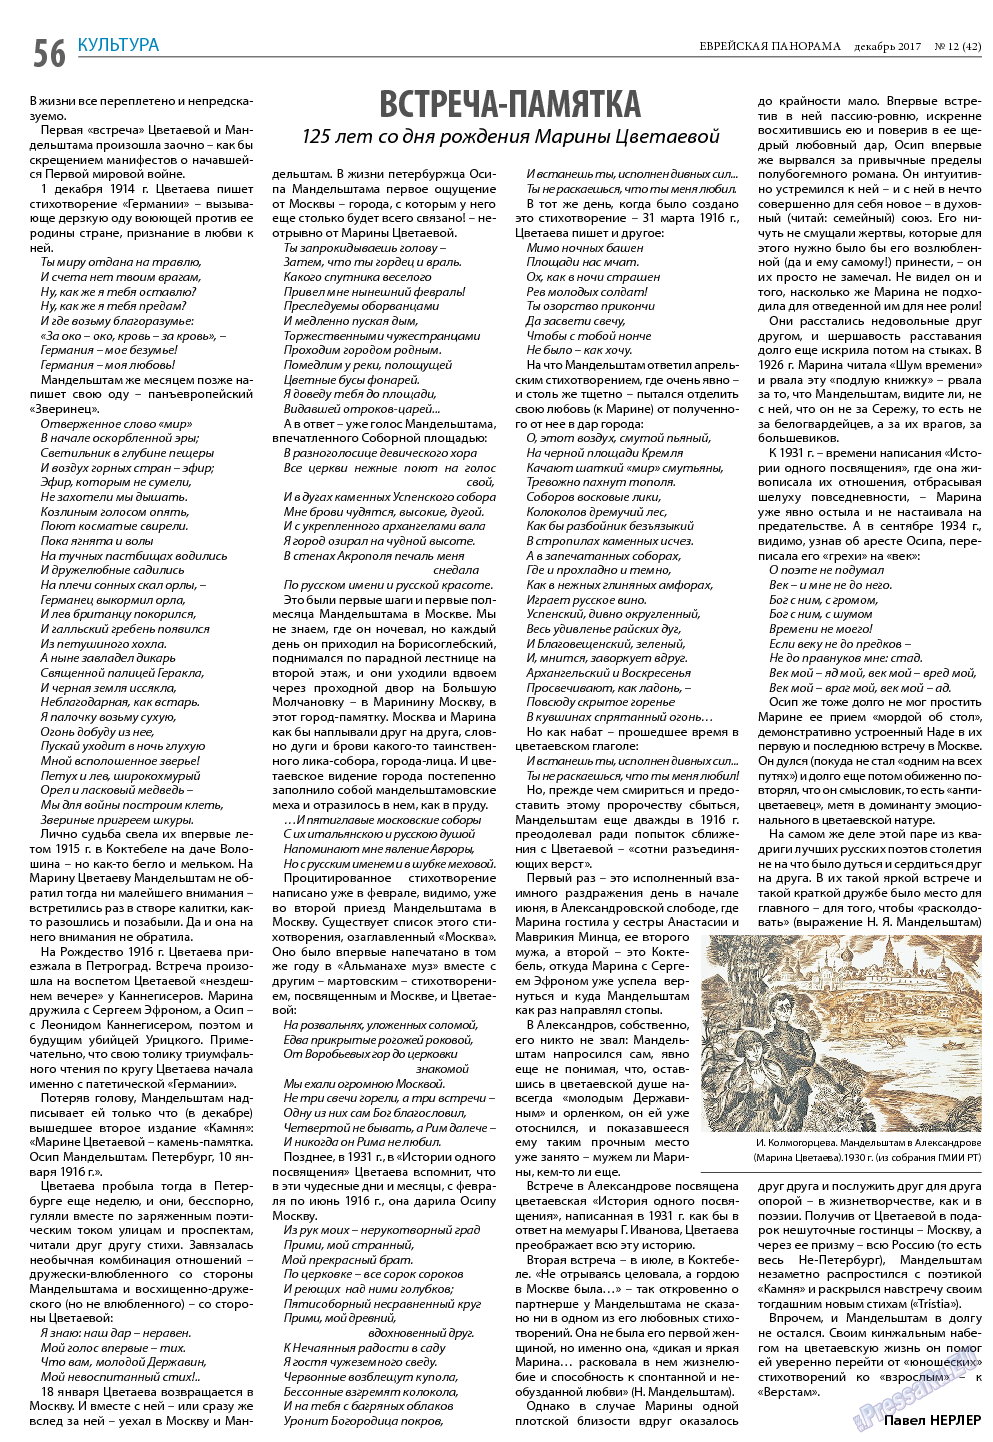 Еврейская панорама, газета. 2017 №12 стр.56